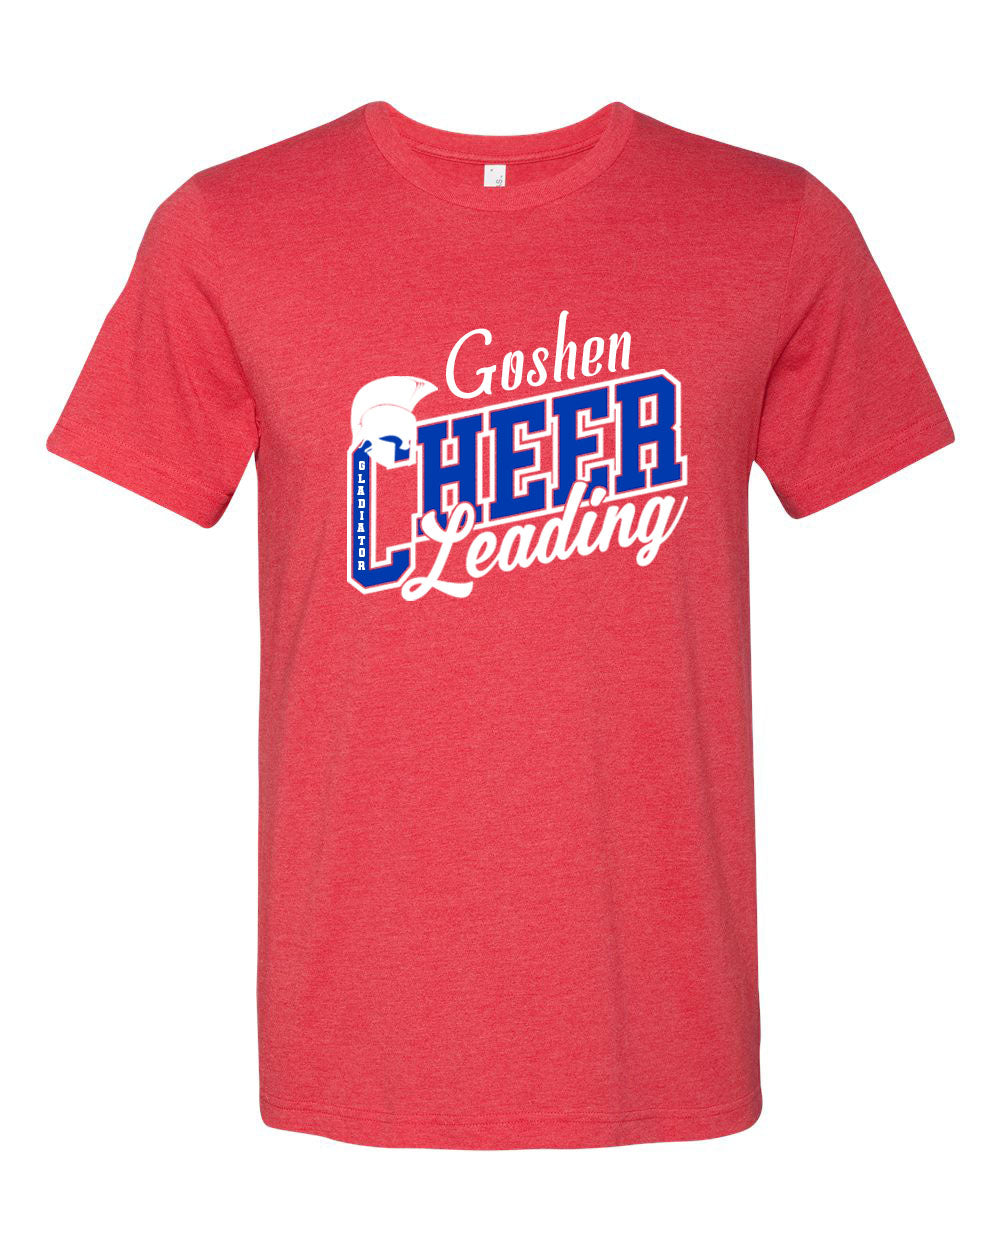 Goshen Cheer Design 14 t-Shirt